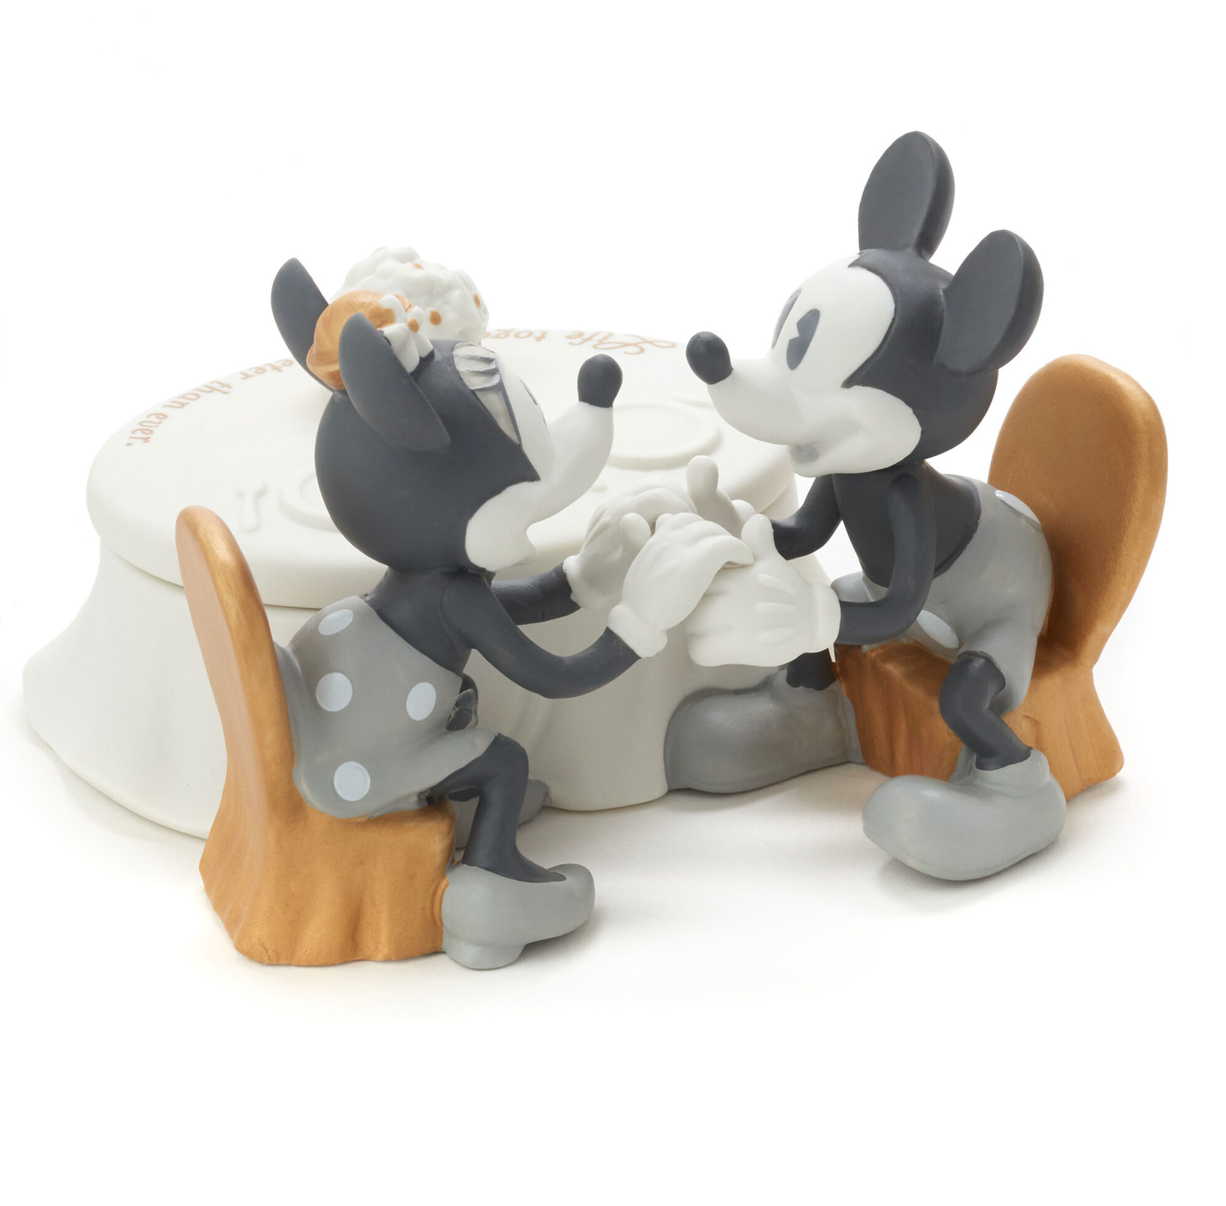 Hallmark Valentine Disney Mickey and Minnie Sweeter Than Ever Trinket Box New